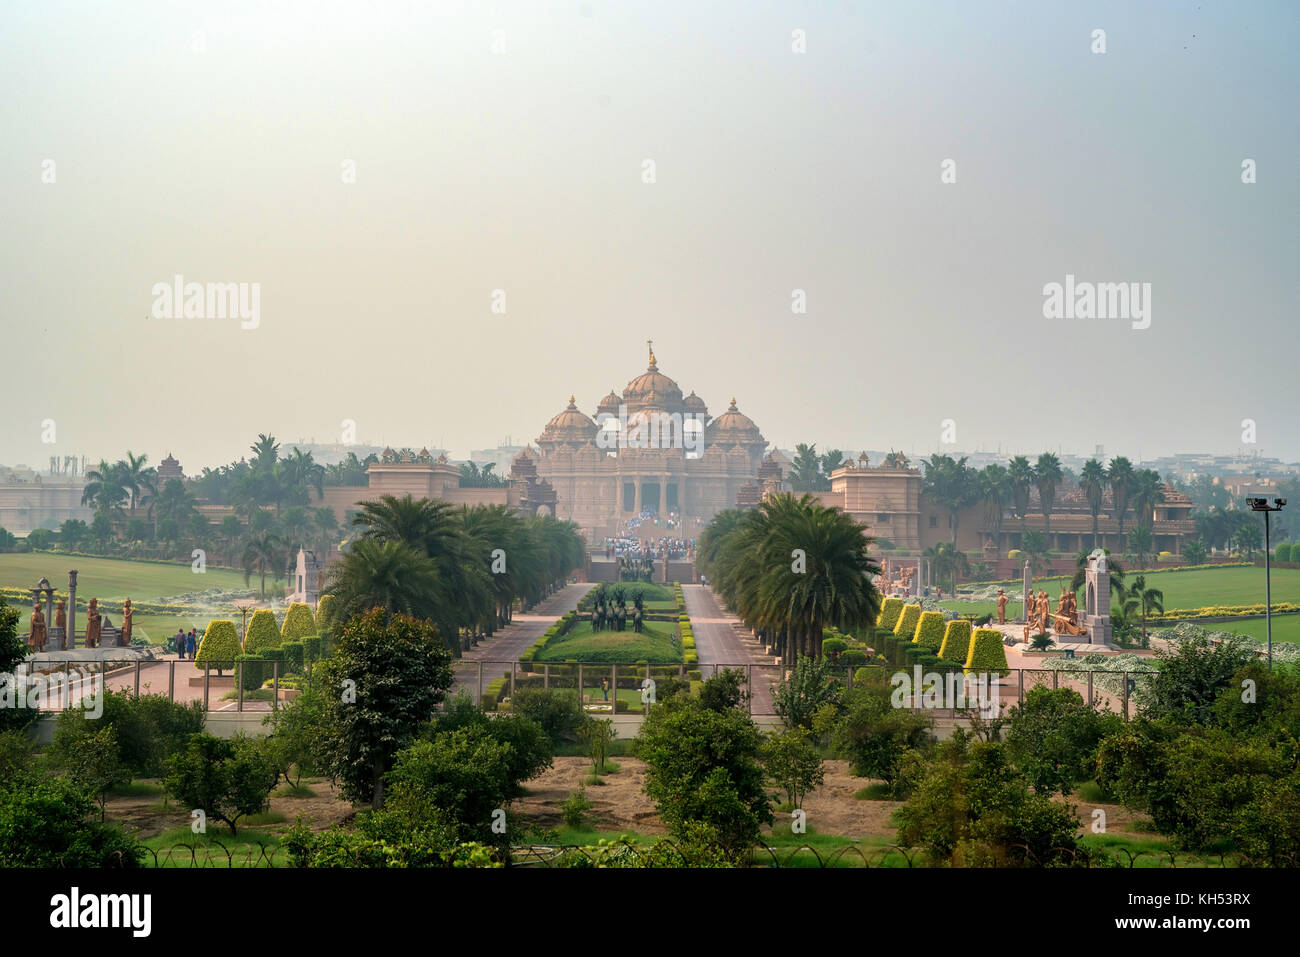 Facade of a temple Akshardham in Delhi, India Stock Photo